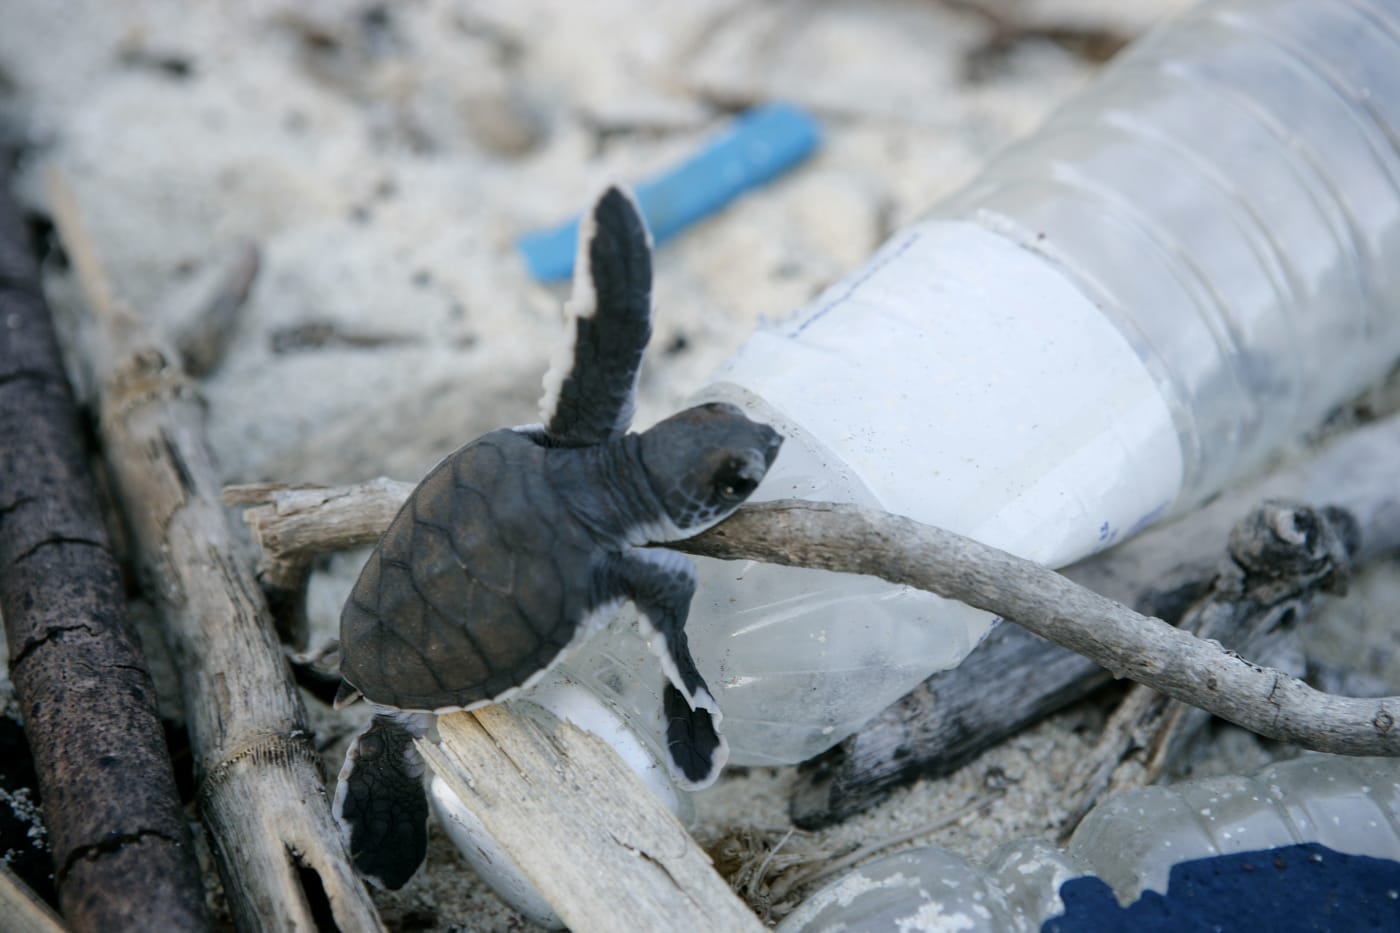 Green turtle hatchling climbing over plastic bottle strewn on the beach, Juani Island, Tanzania